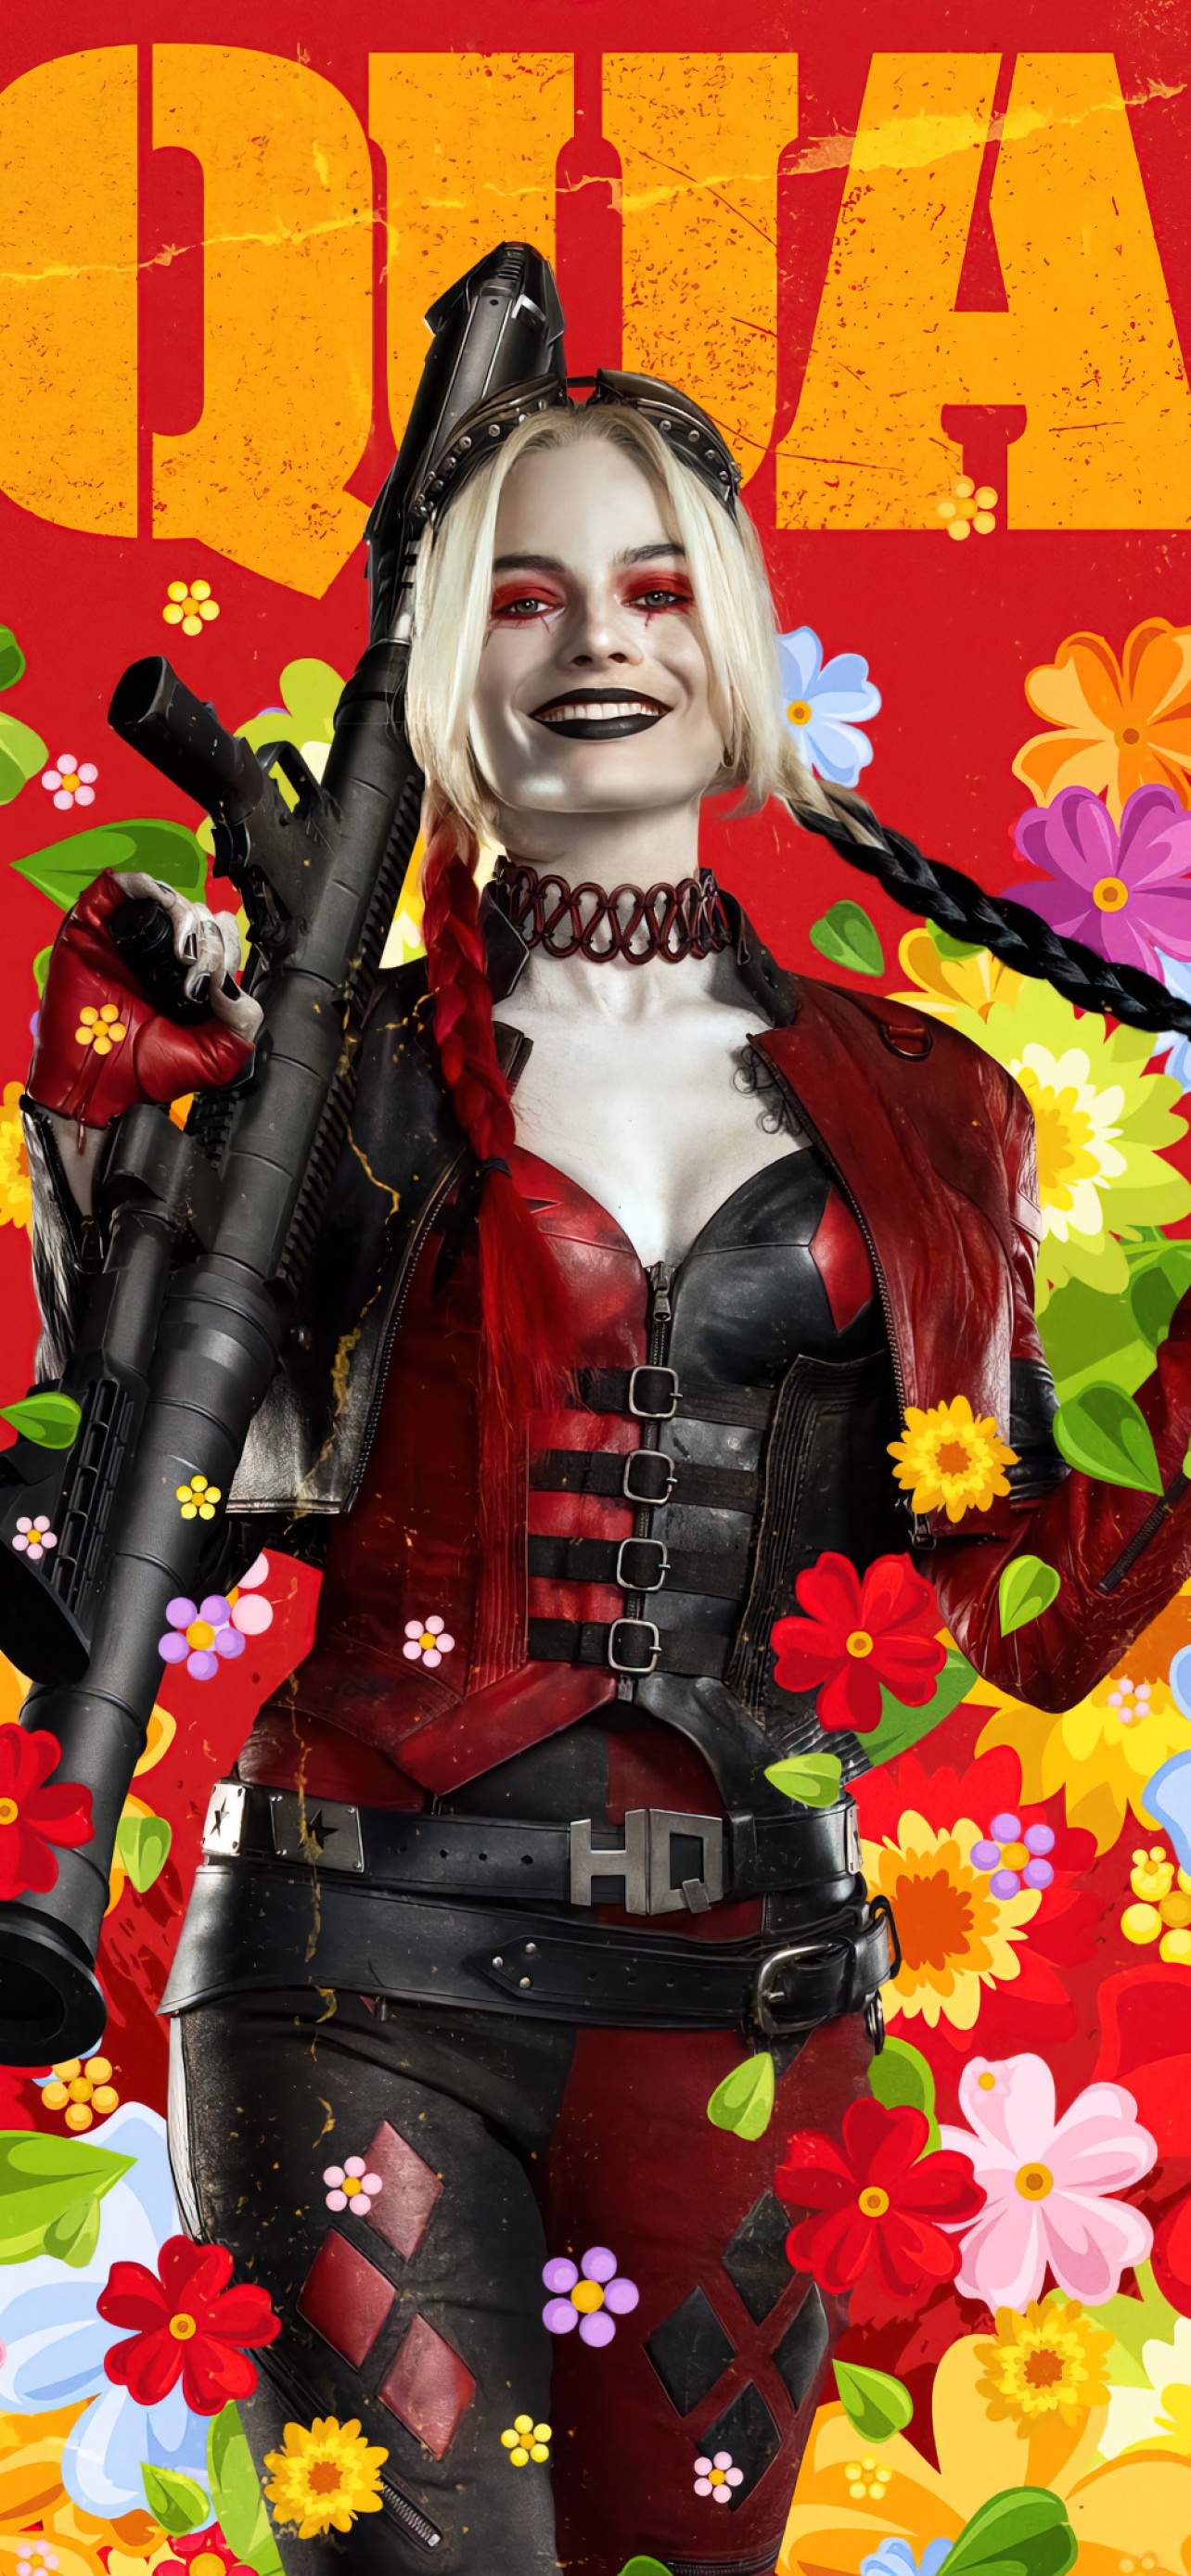 Joker and Harley Quinn Wallpapers  Top 25 Best Joker and Harley Quinn  Backgrounds Download